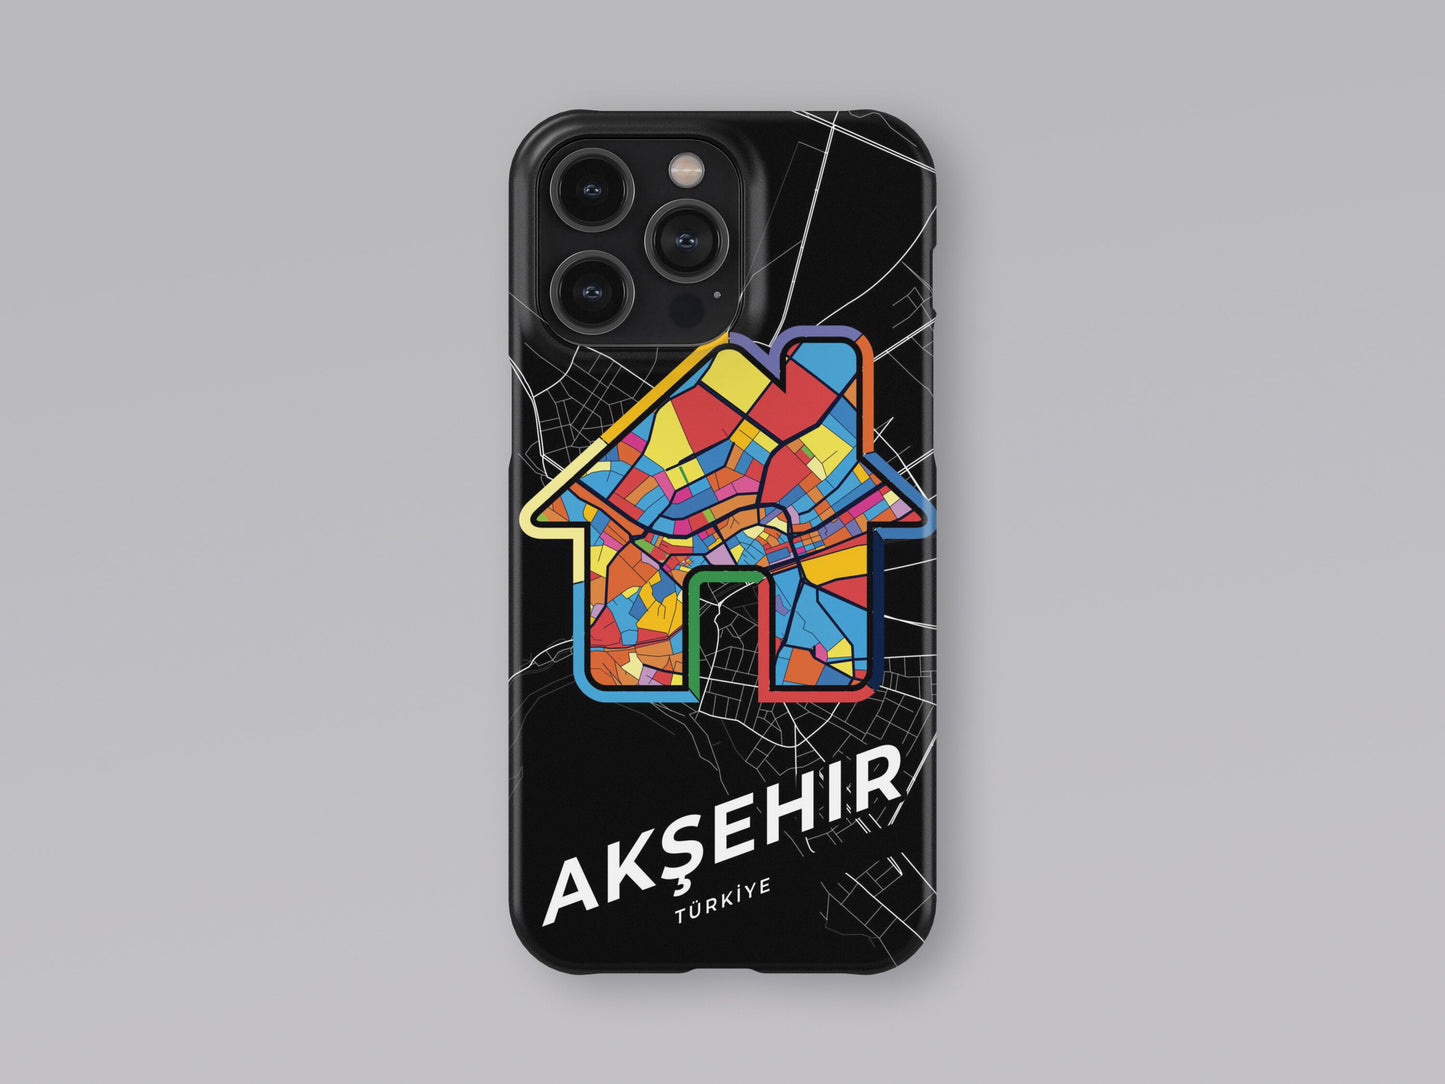 Akşehir Turkey slim phone case with colorful icon. Birthday, wedding or housewarming gift. Couple match cases. 3